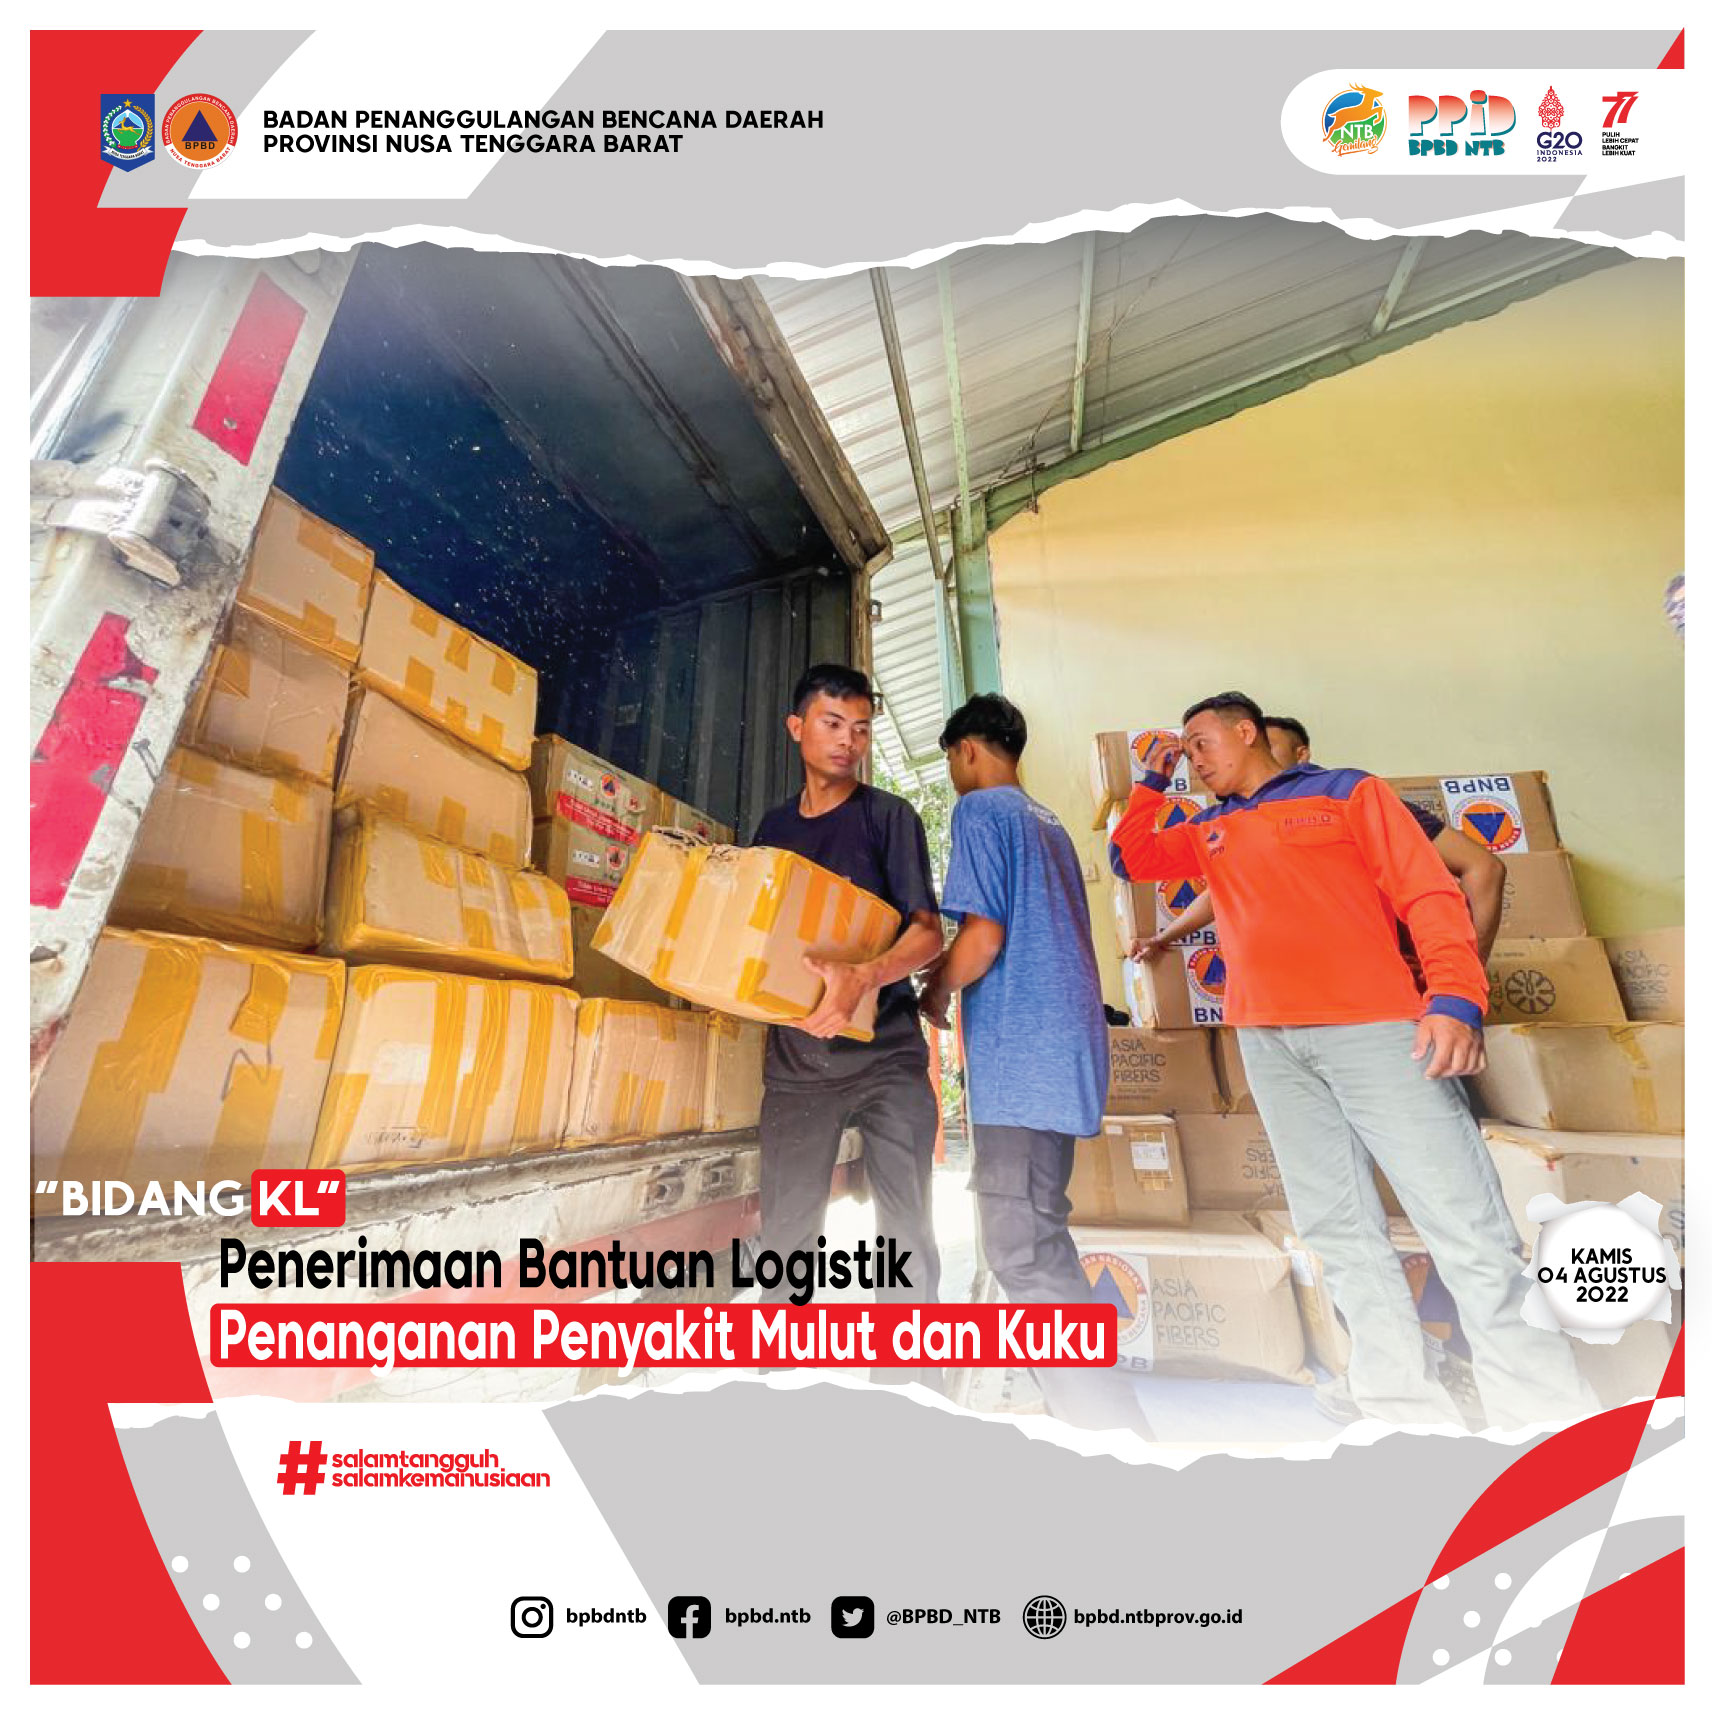 Penerimaan Bantuan Logistik Penanganan Penyakit Mulut dan Kuku (Kamis, 04 Agustus 2022)